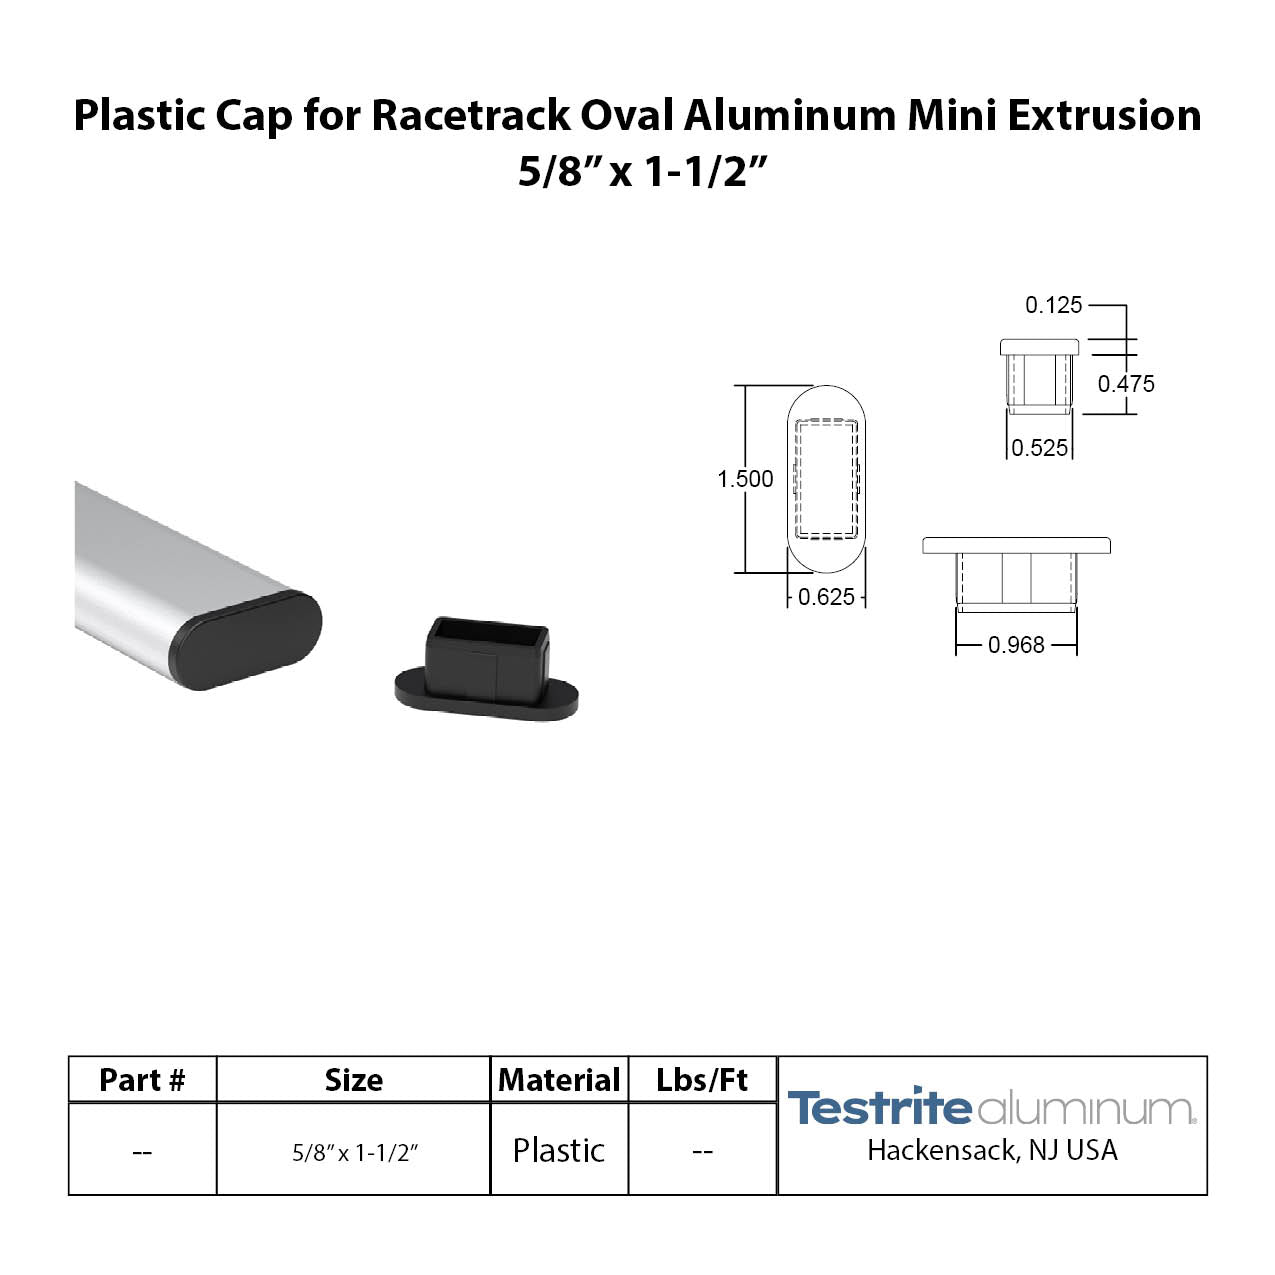 Plastic End Cap for Racetrack Oval Mini, 5/8" x 1-1/2" Black Plastic